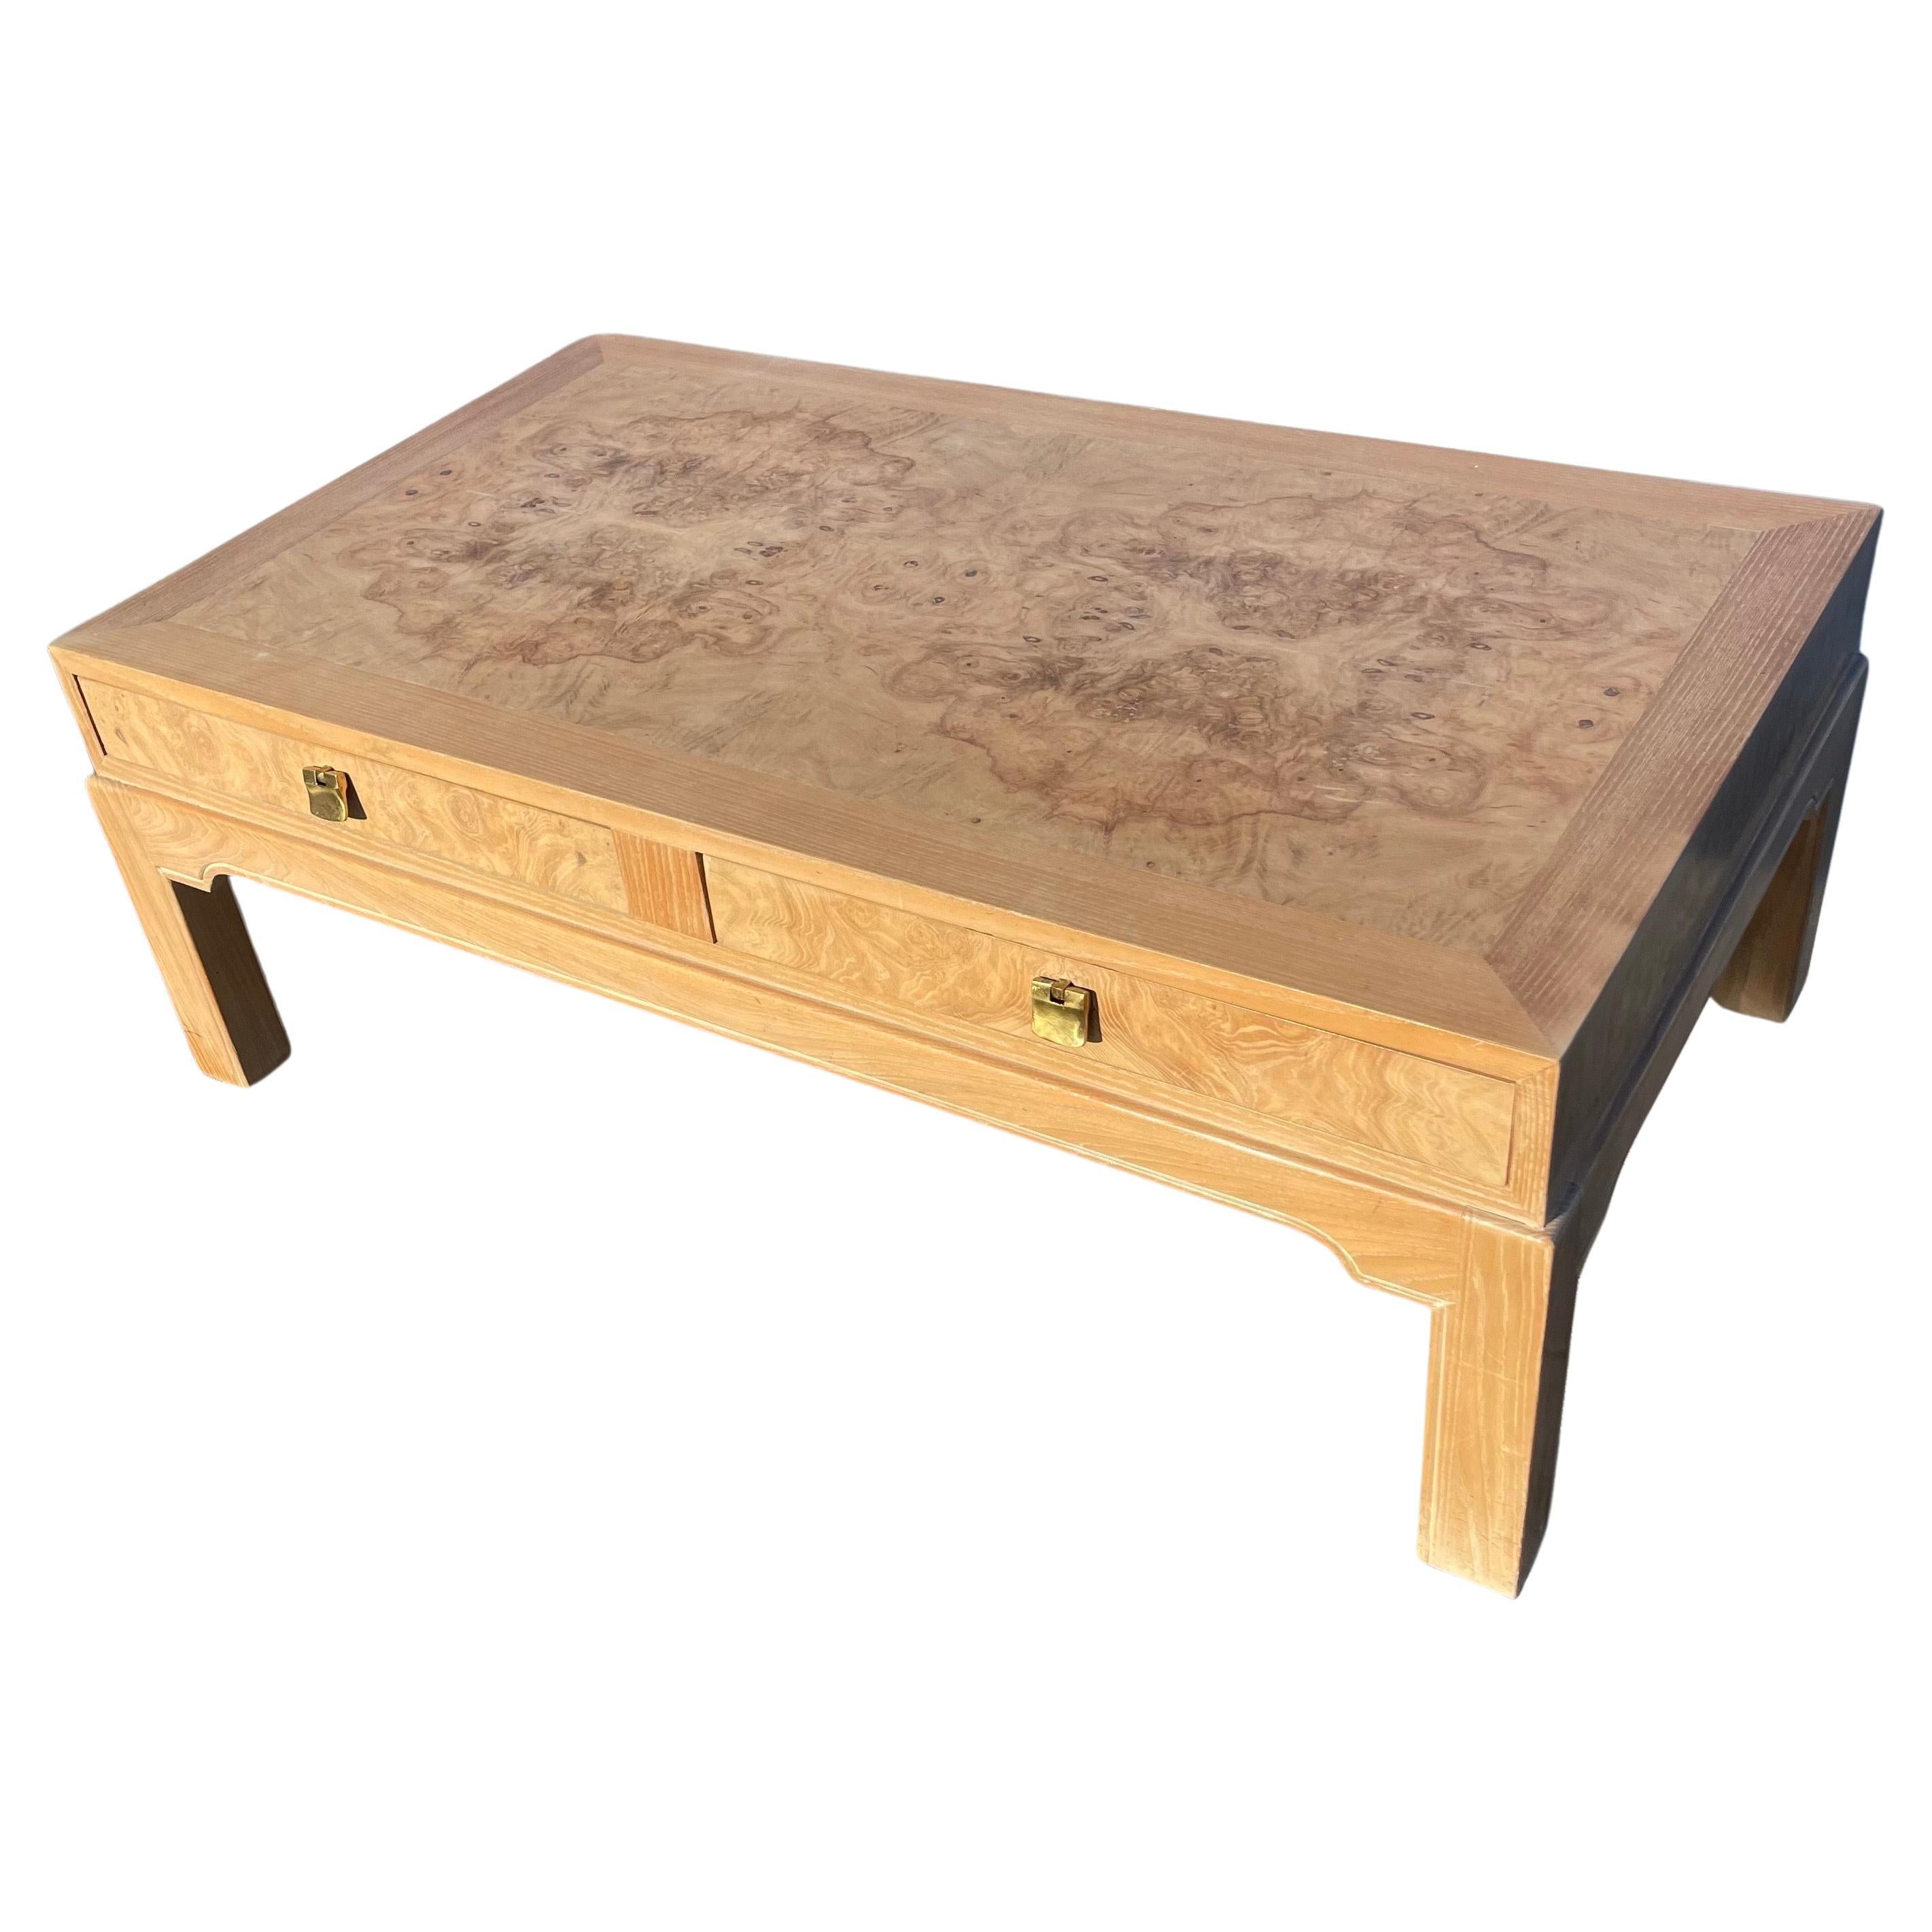 Drexel Heritage “Corinthian” Collection Burl Wood Coffee Table w/Drawers